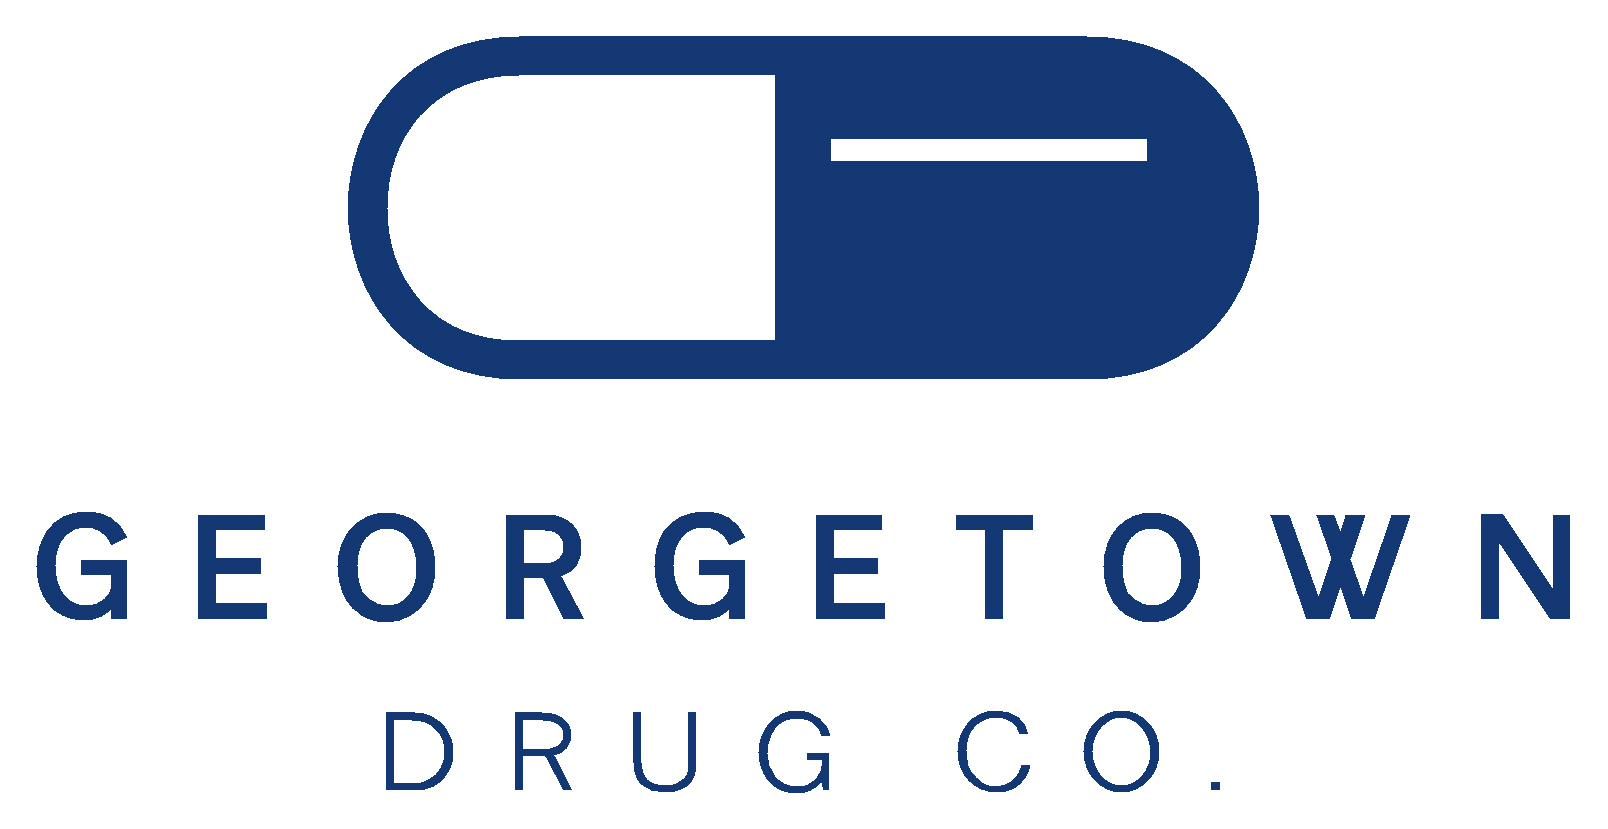 Georgetown Drug Company